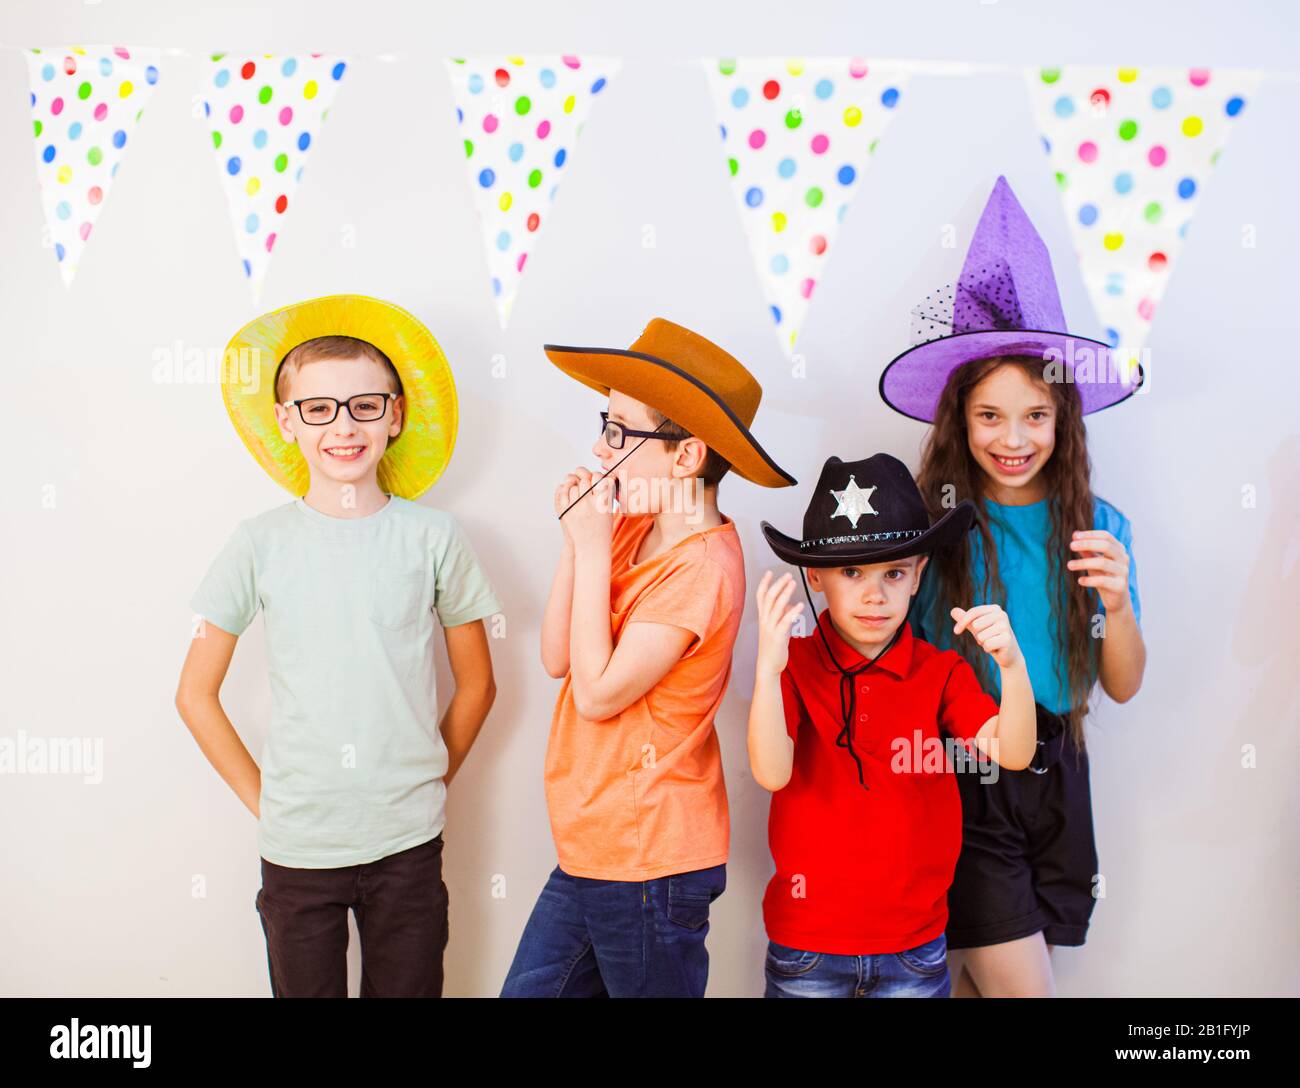 Sombreros divertidos fotografías e imágenes de alta resolución - Alamy